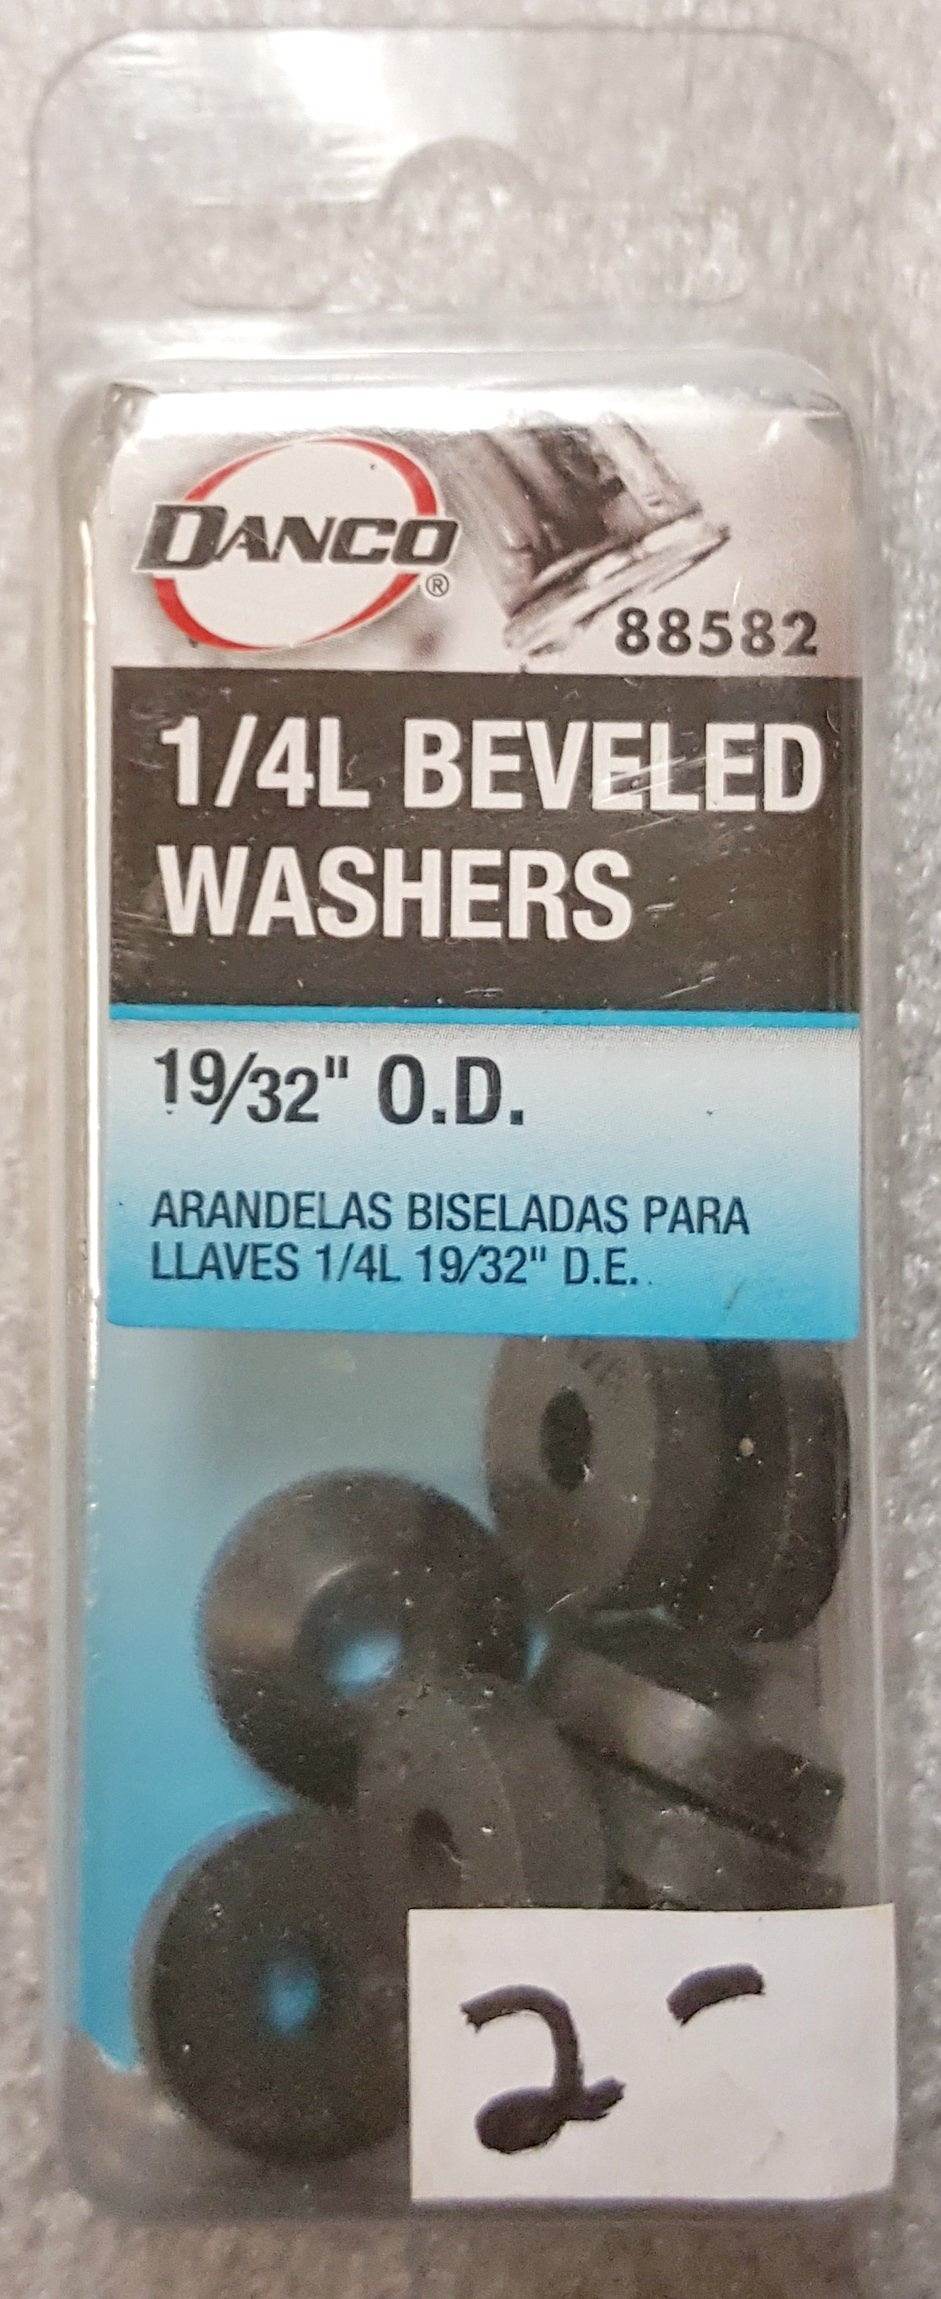 Danco 88582 1/4L Rubber Beveled Washer, 19/32